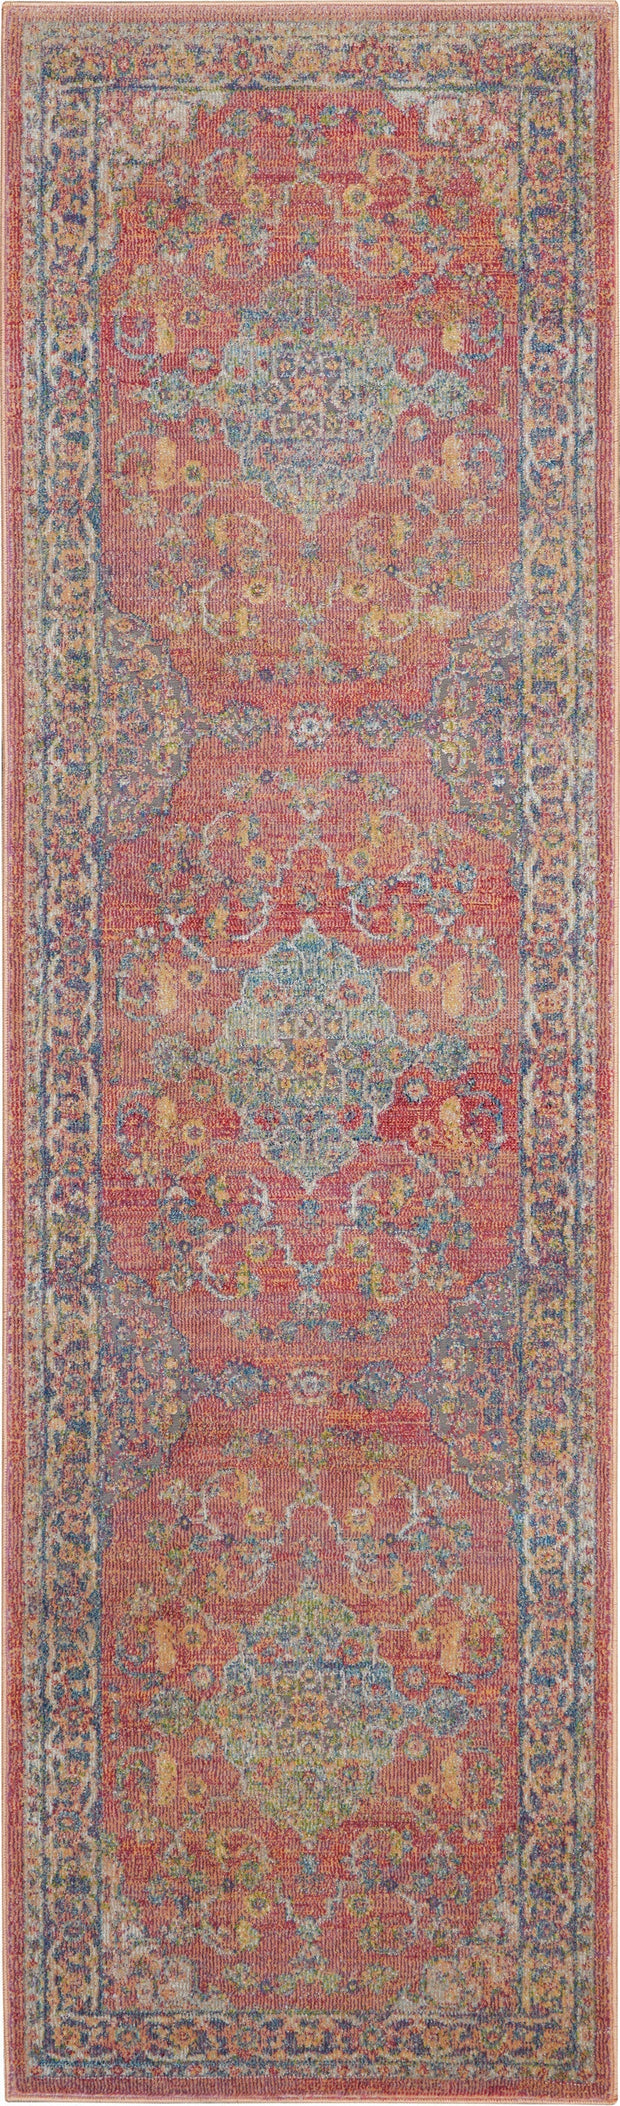 ankara global multicolor rug by nourison 99446458575 redo 3